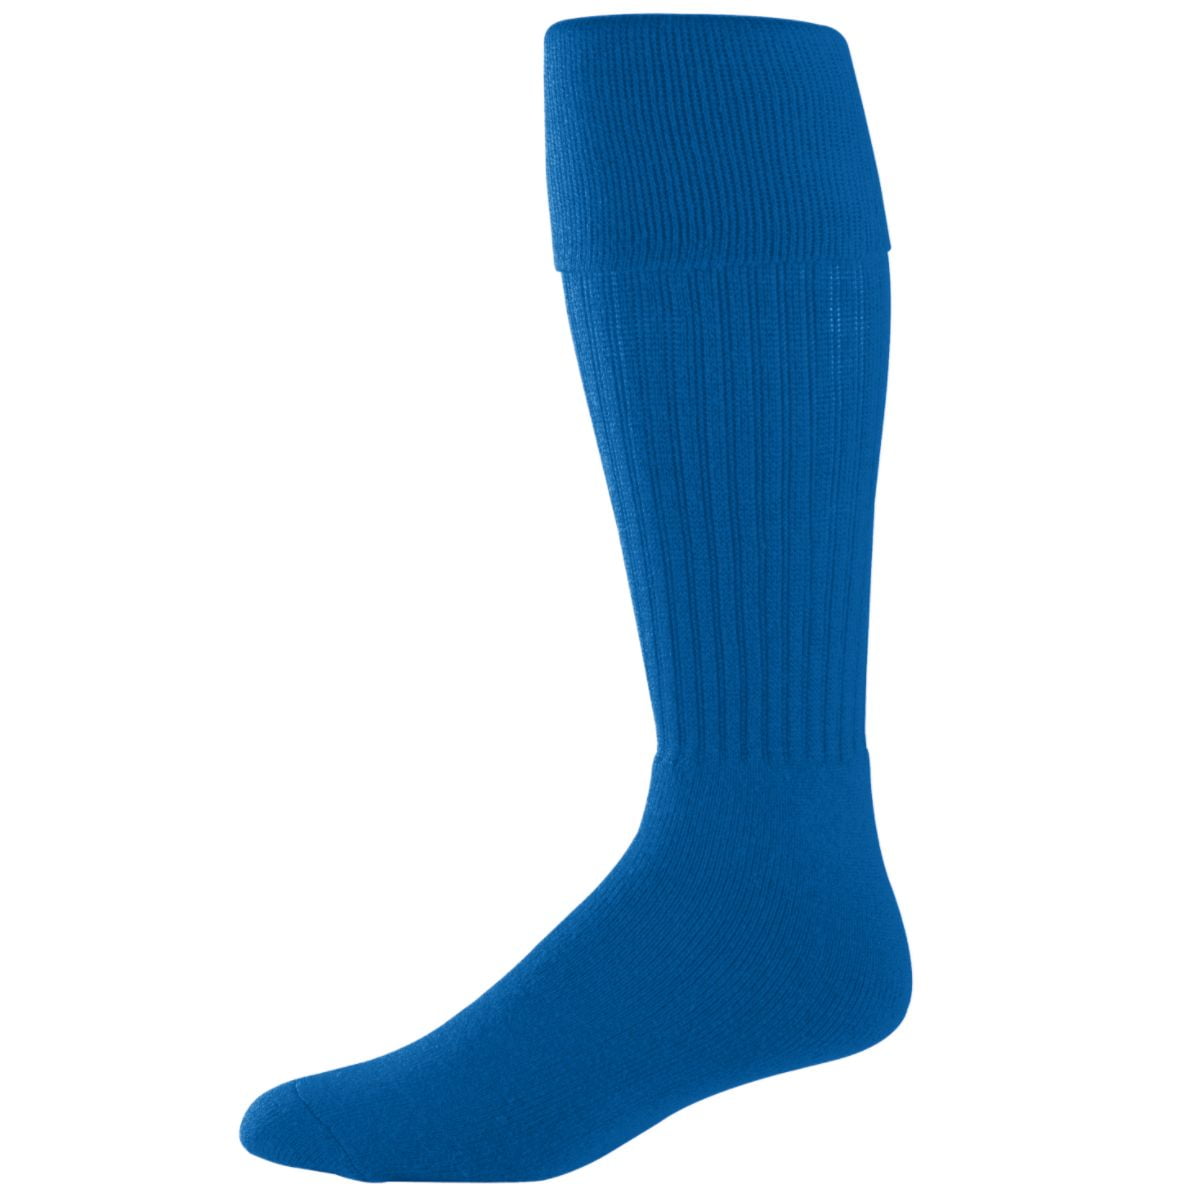 6035 Soccer Socks - Adult ROYAL 42656 - Walmart.com